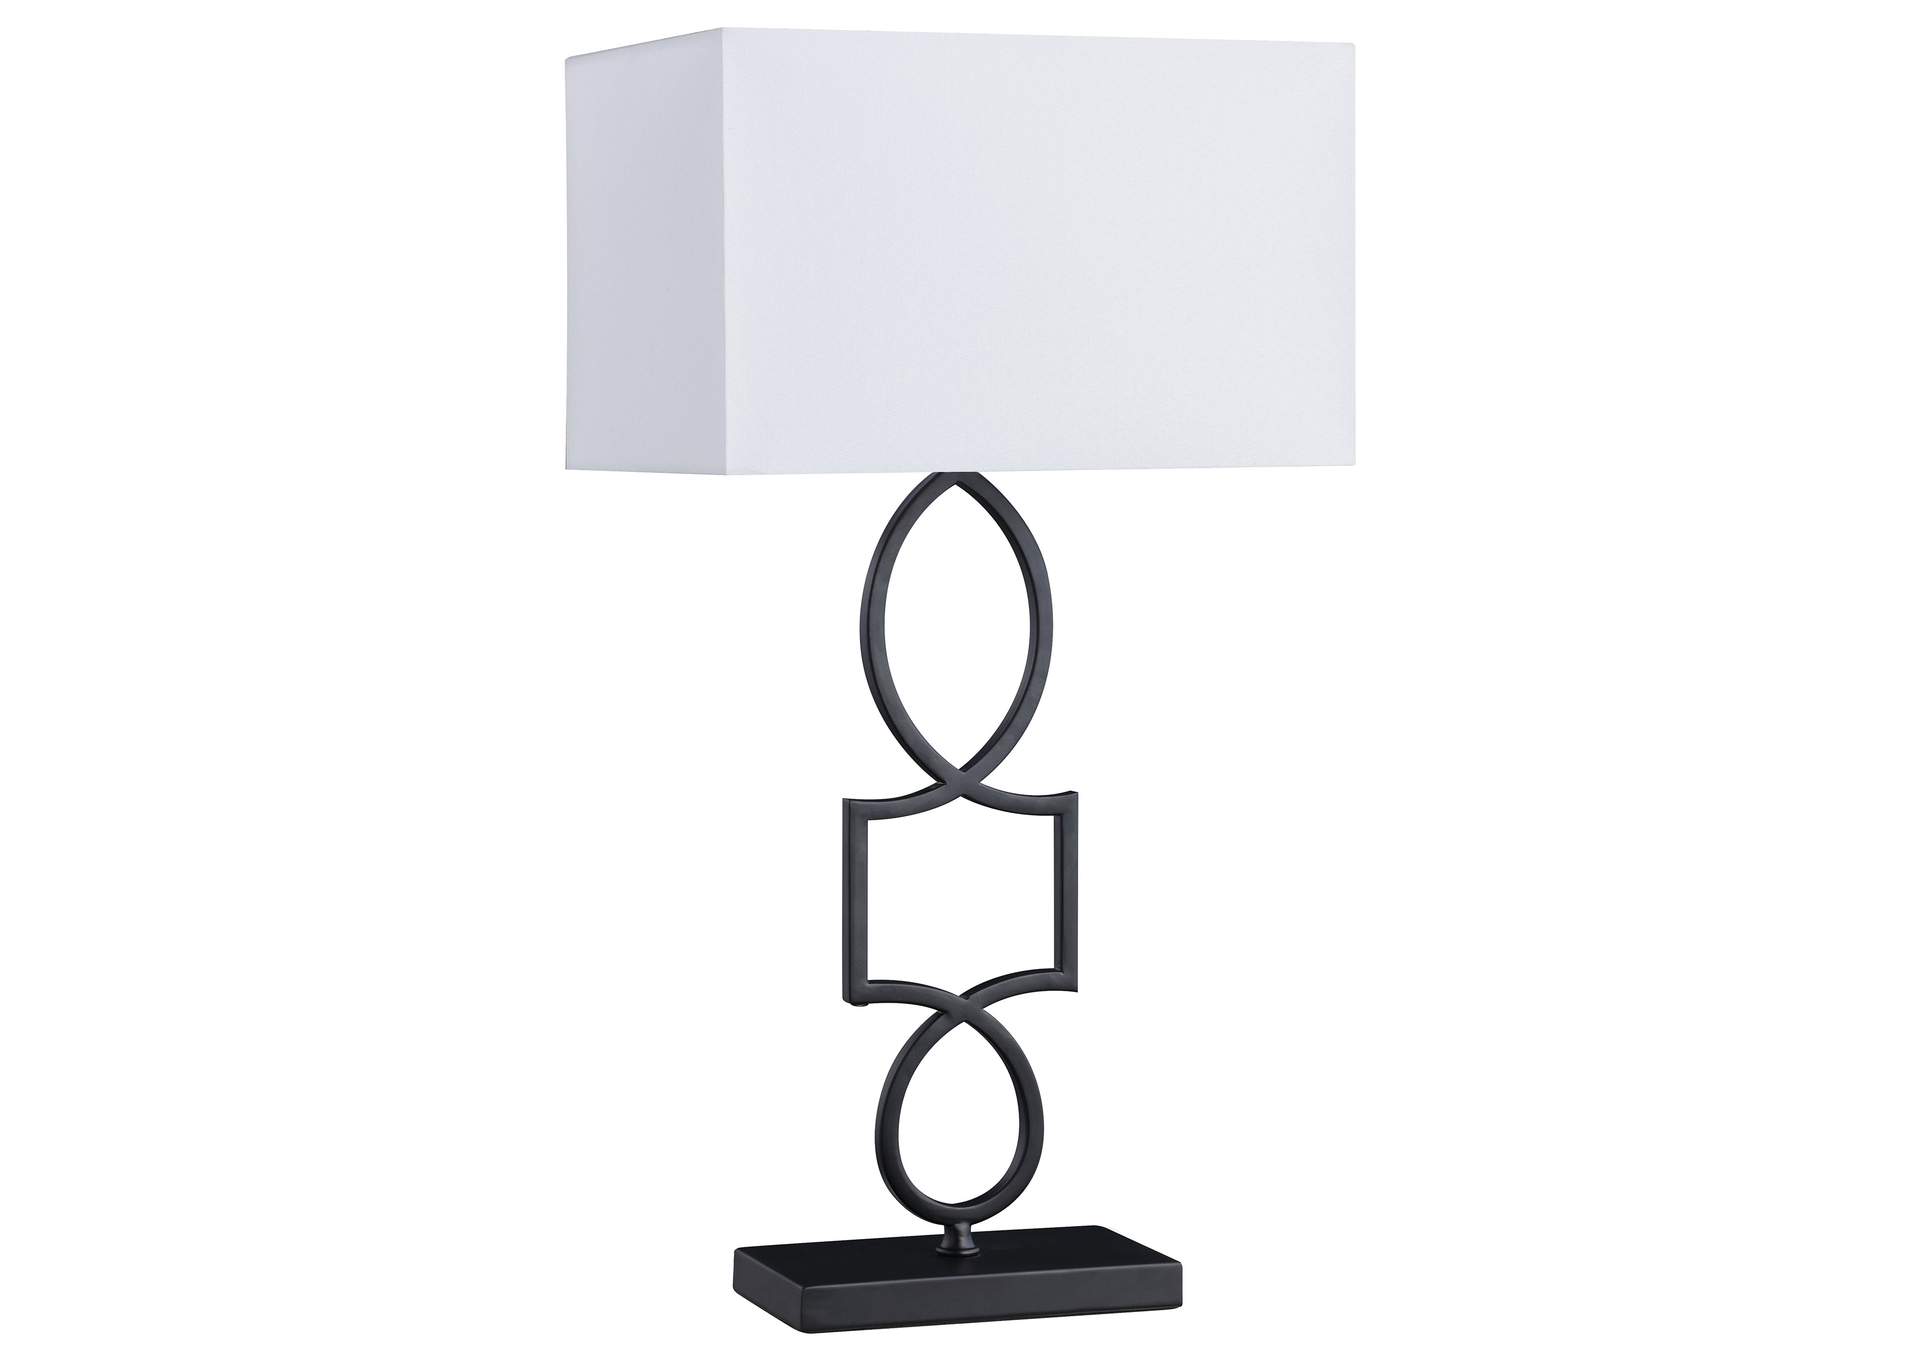 Leorio Rectangular Shade Table Lamp White and Black,Coaster Furniture